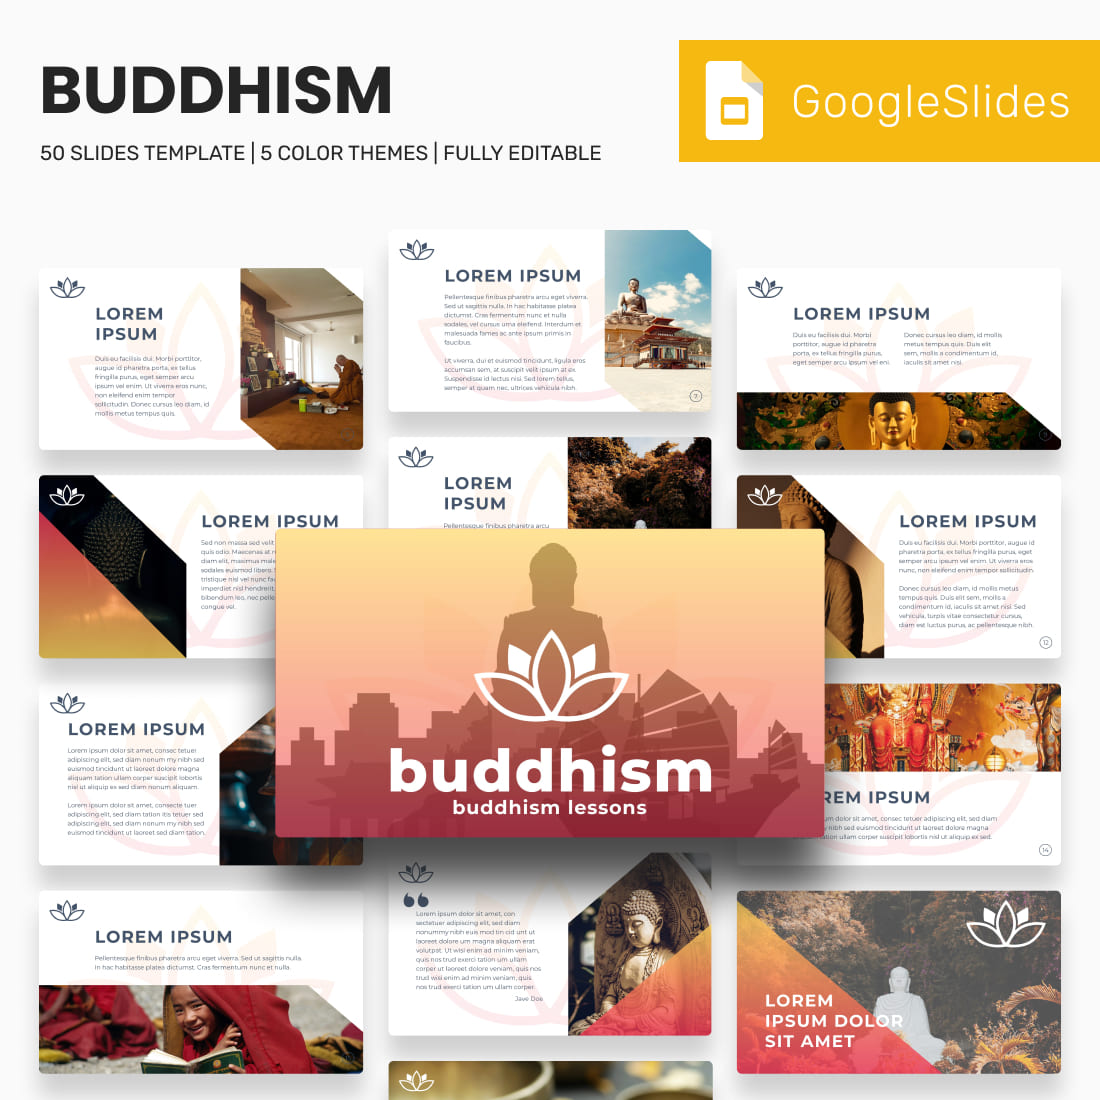 Buddhism googleslides template.